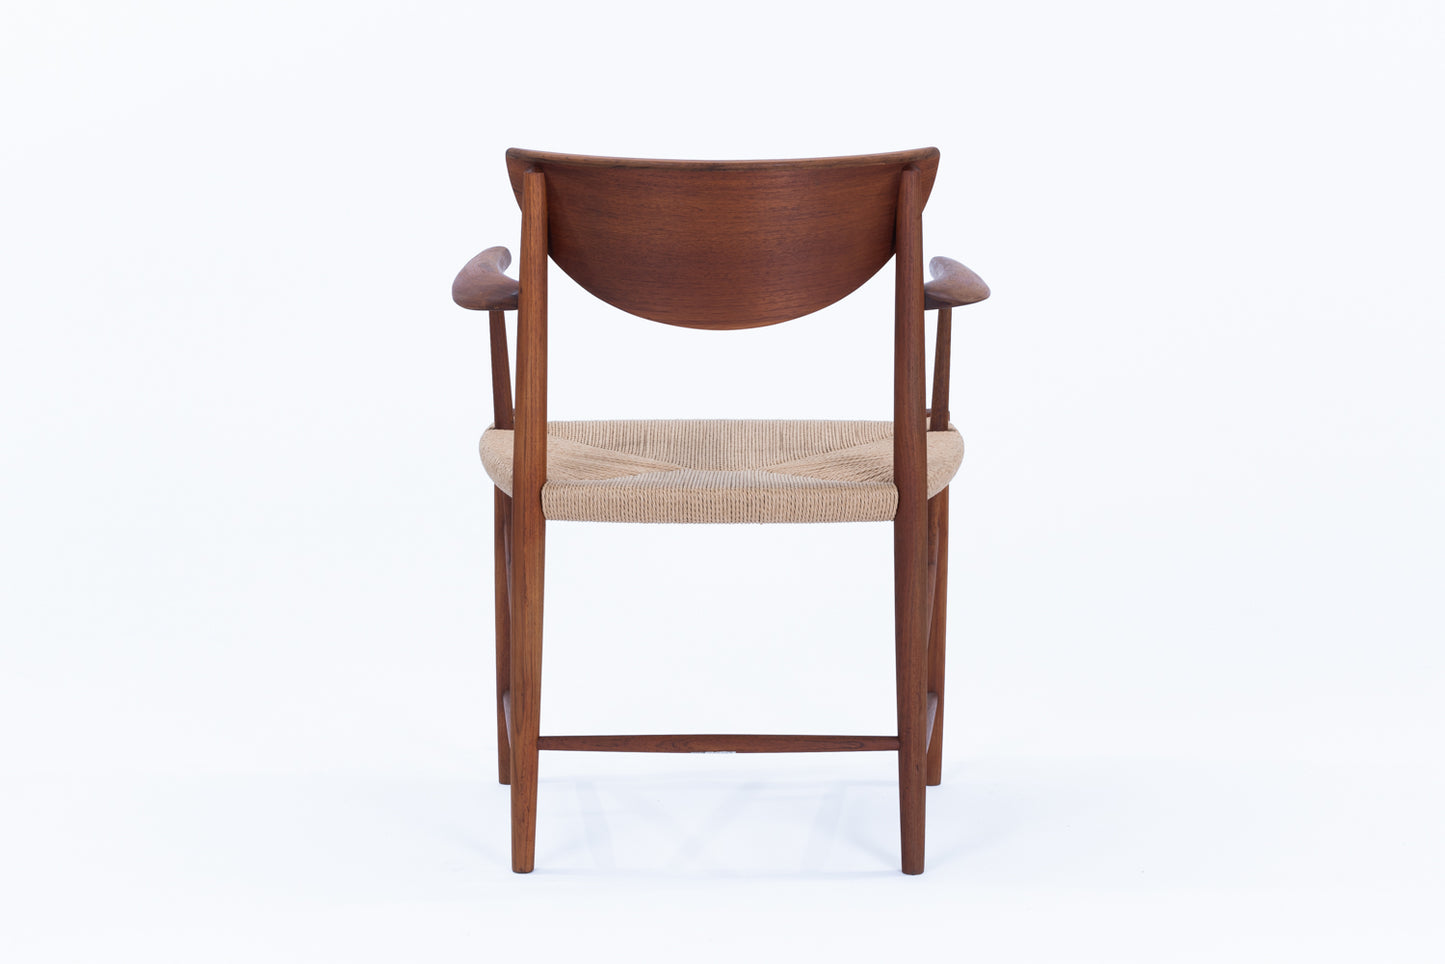 Peter Hvidt & Orla Molgaard Nielsen | model.316 arm chair